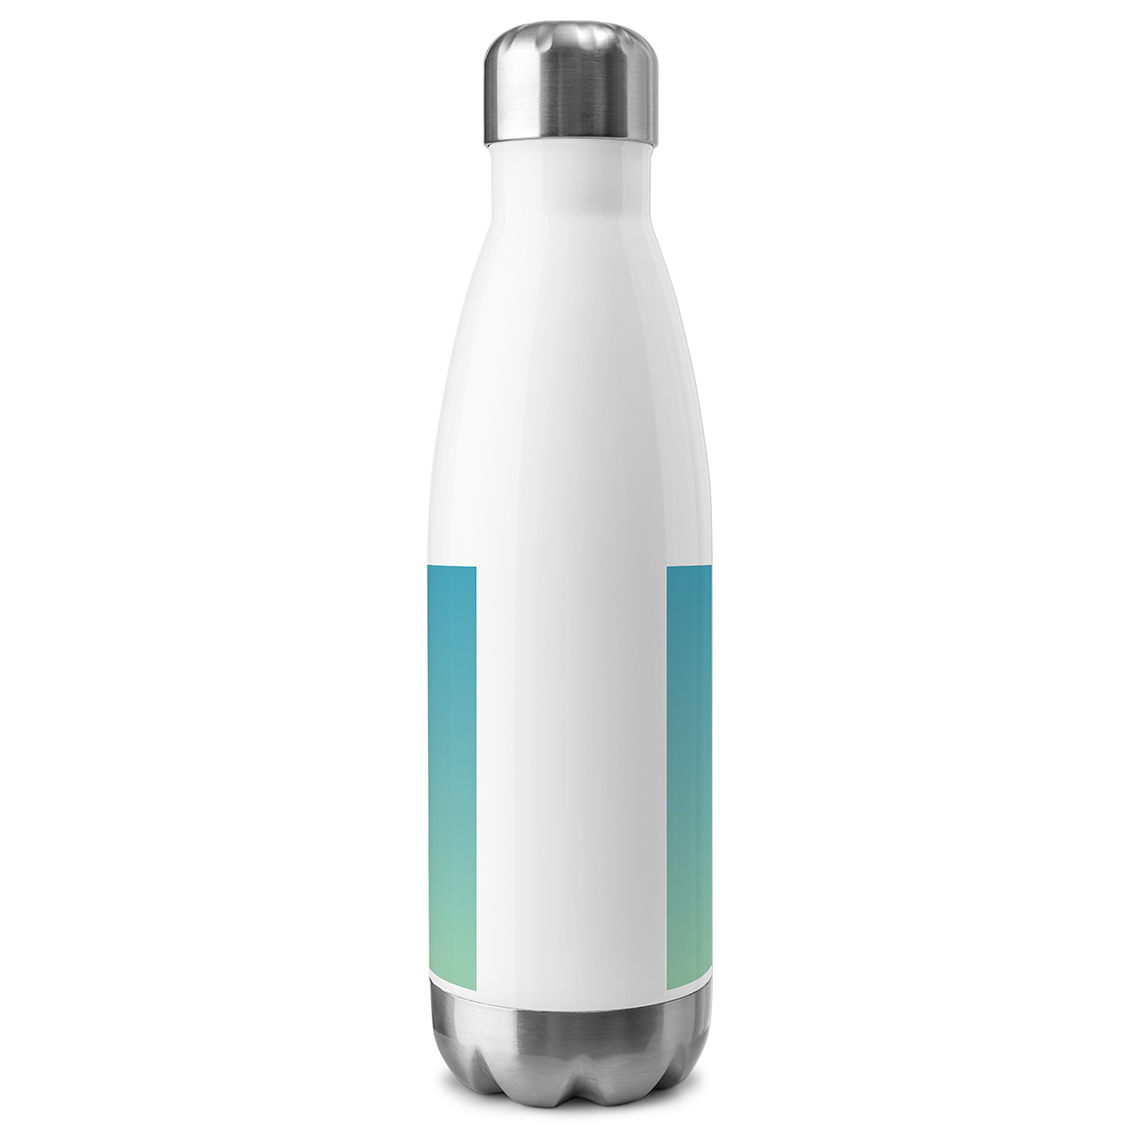 Personalized Photo Water Bottles - Single Photo